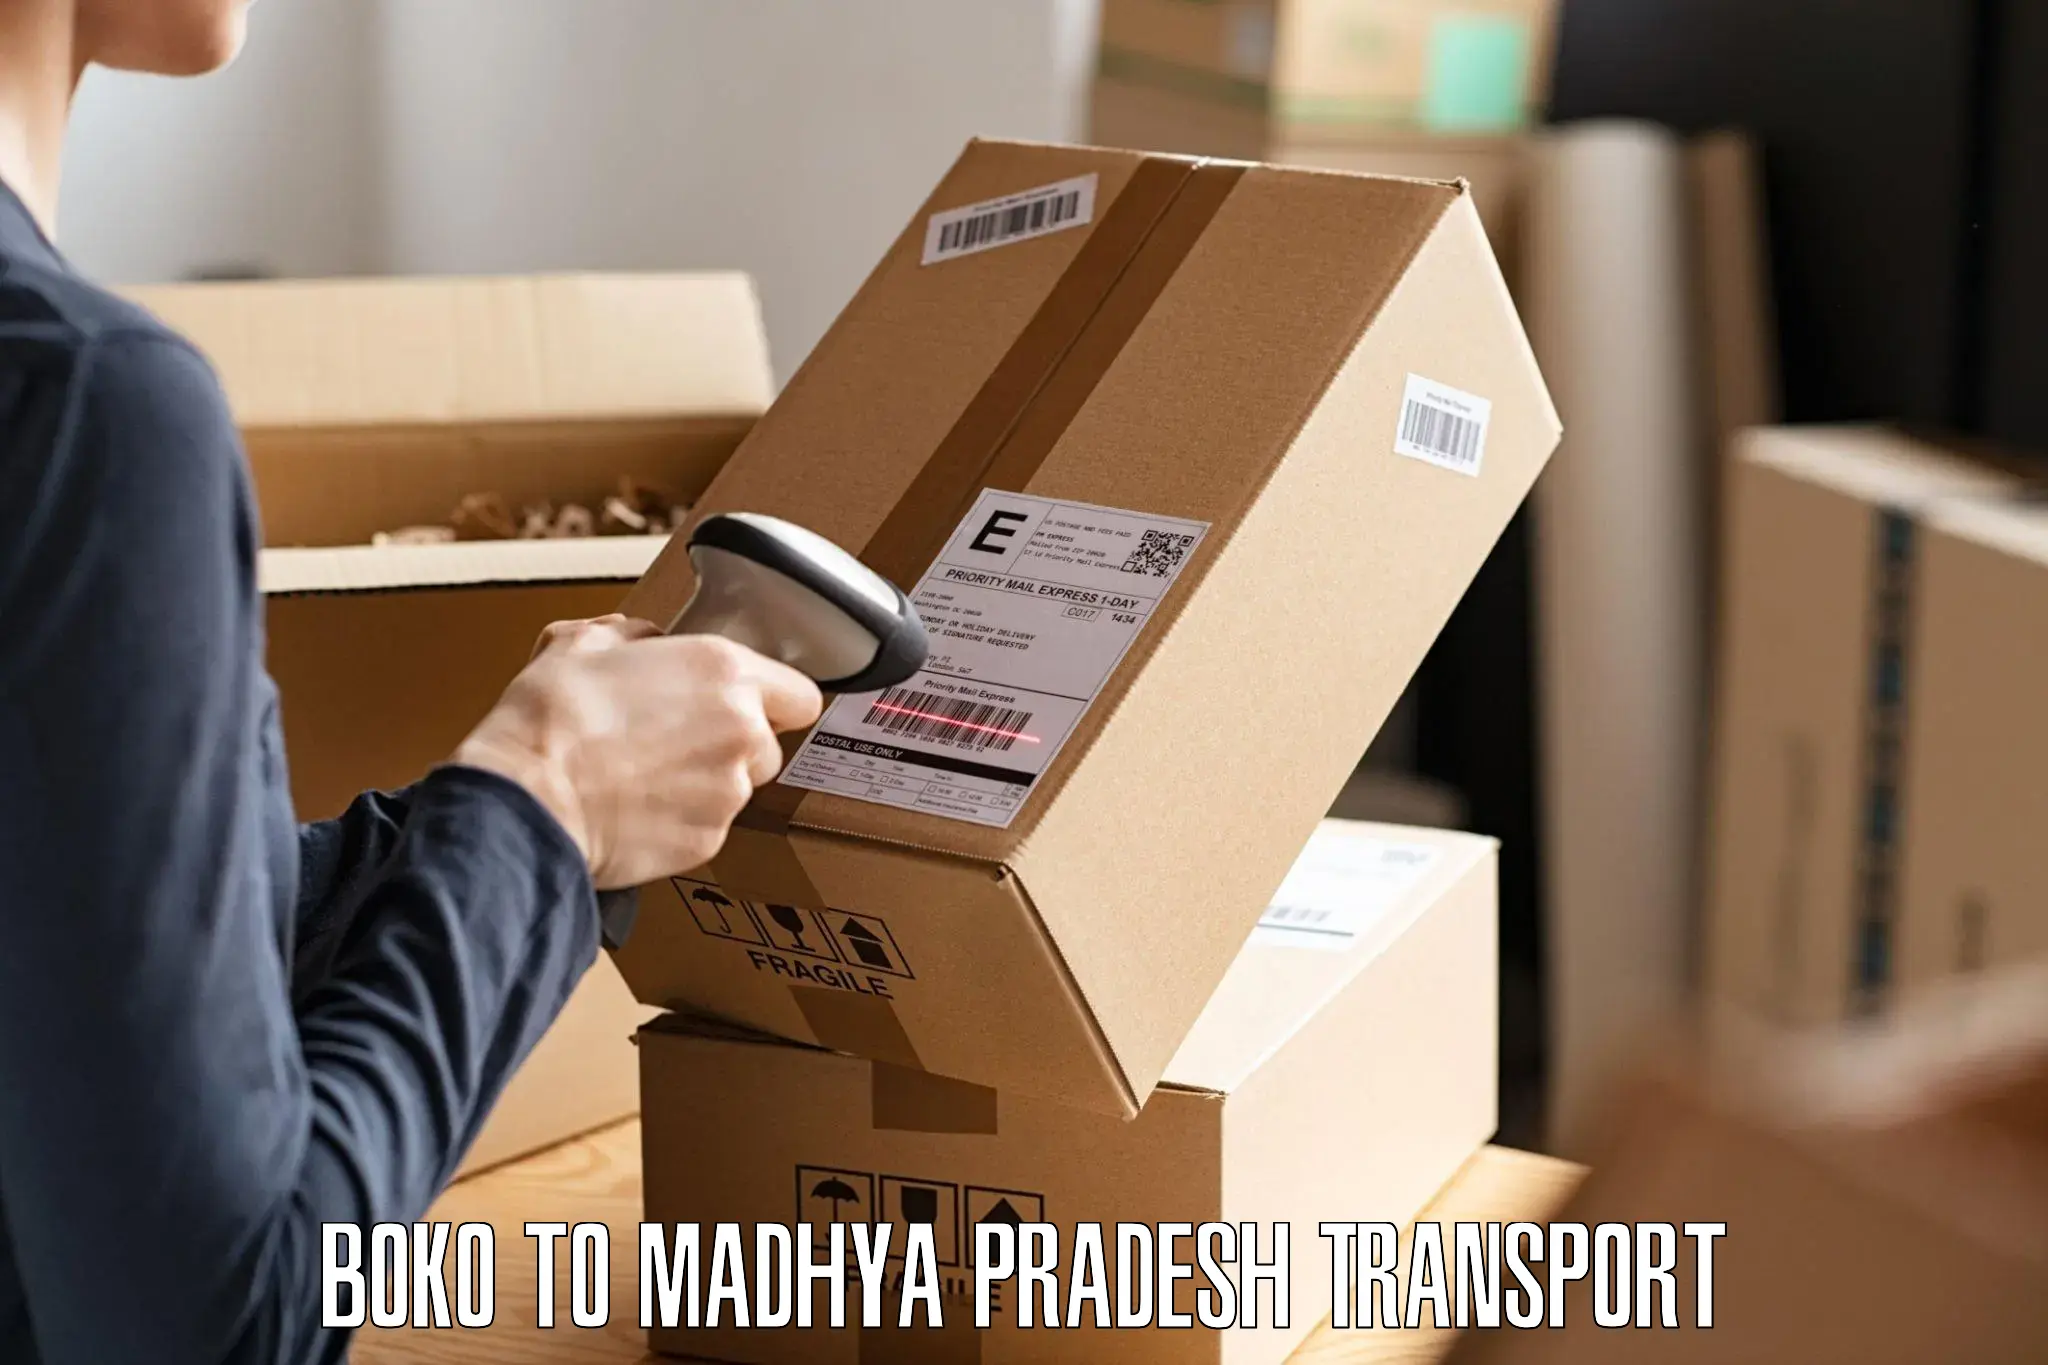 Commercial transport service Boko to Madhya Pradesh